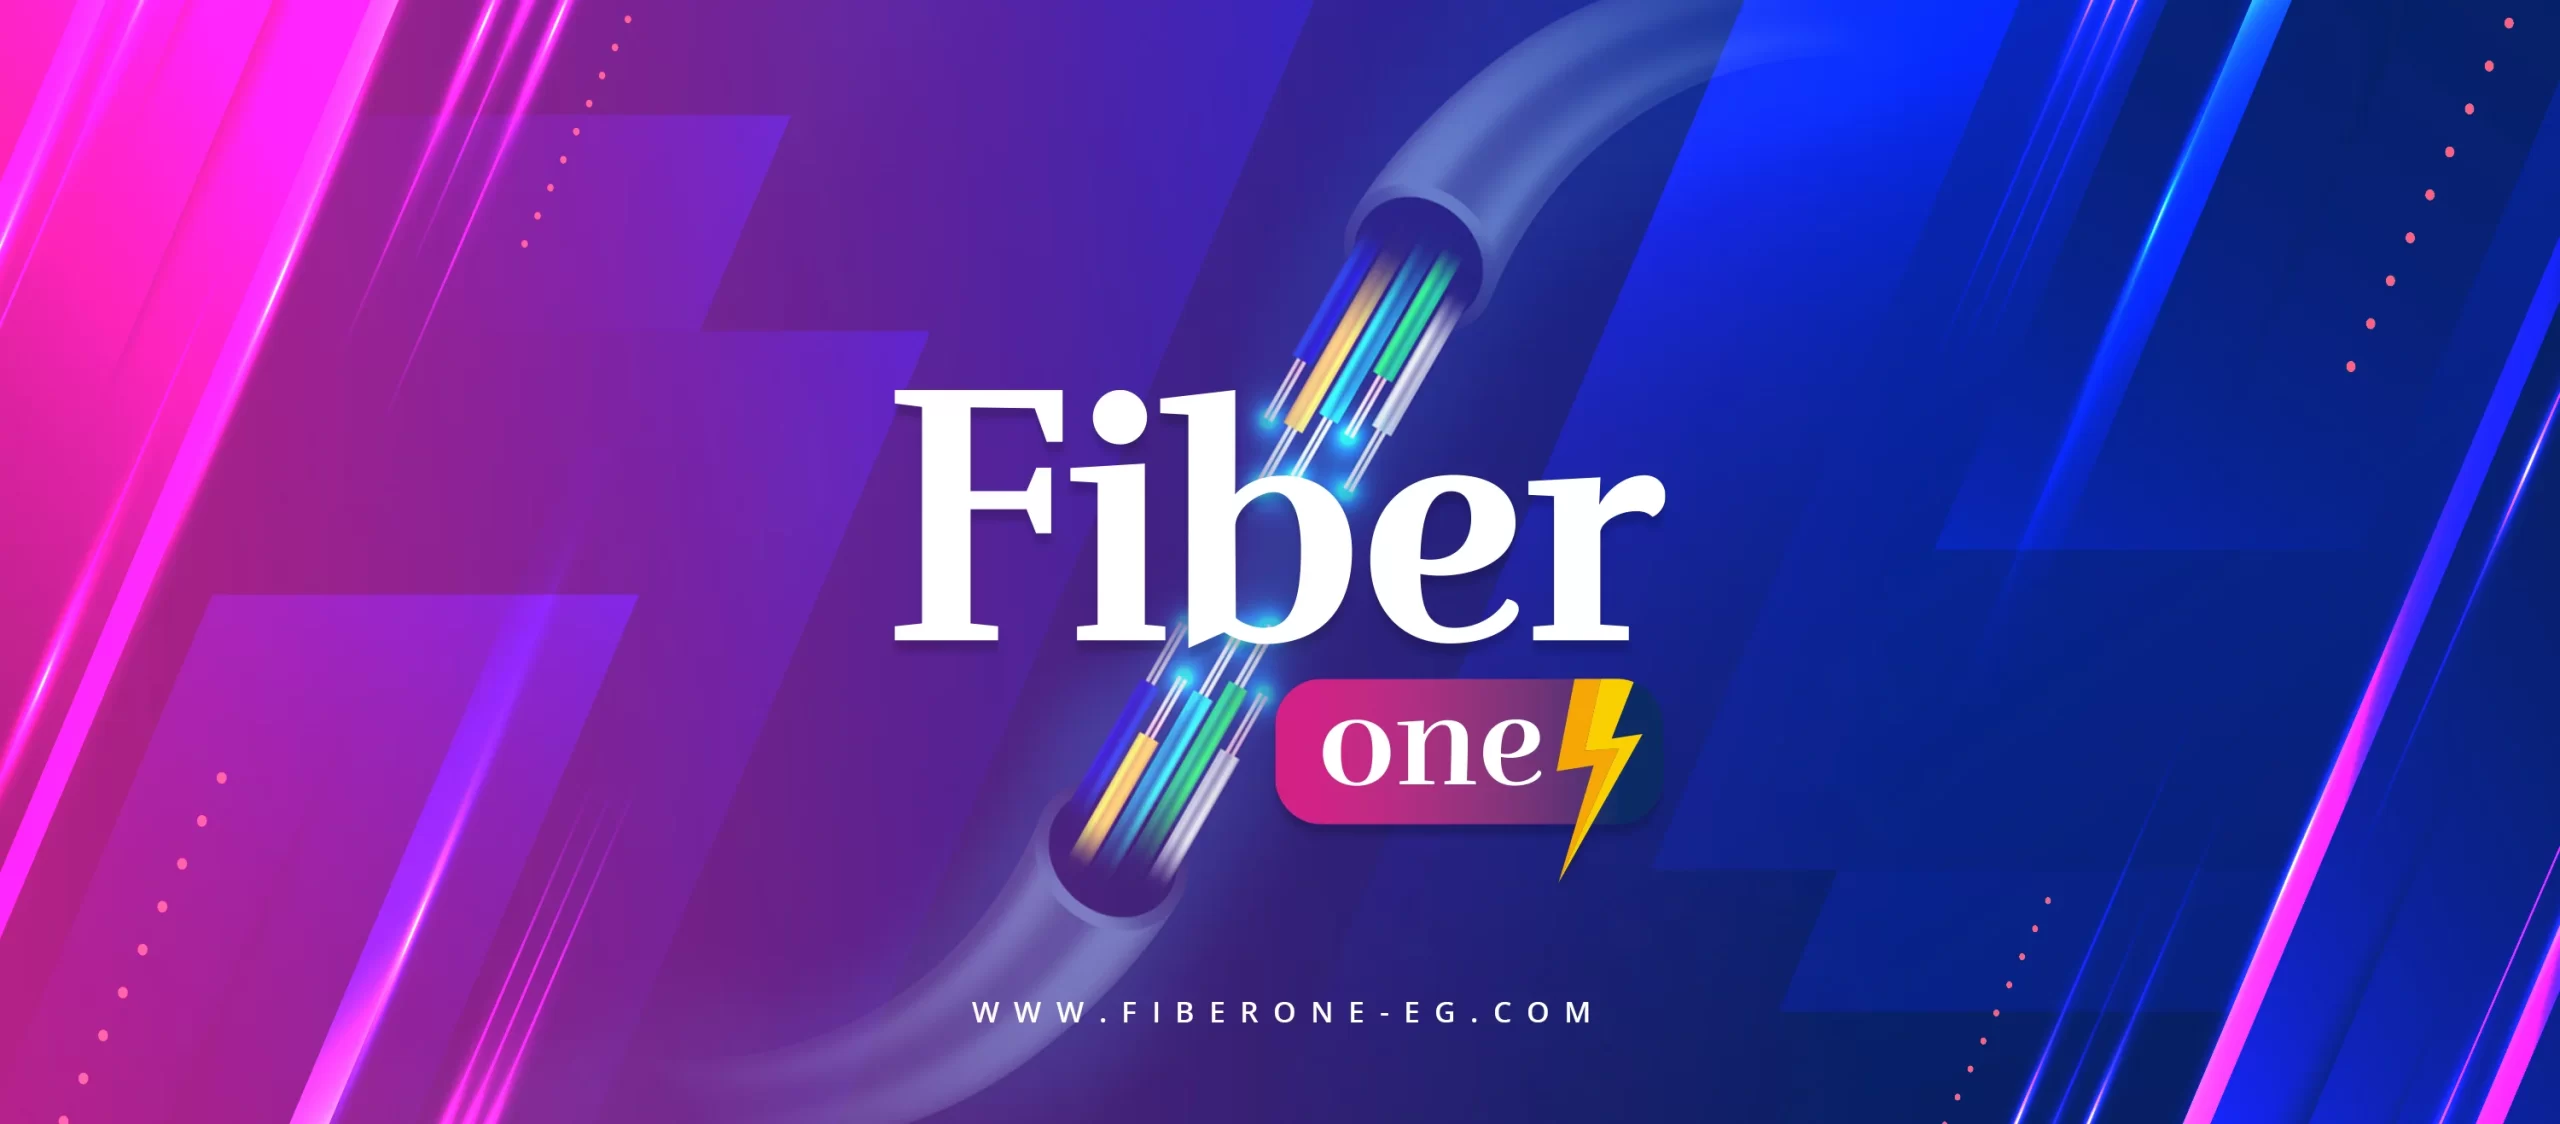 fiber one social media 19 scaled